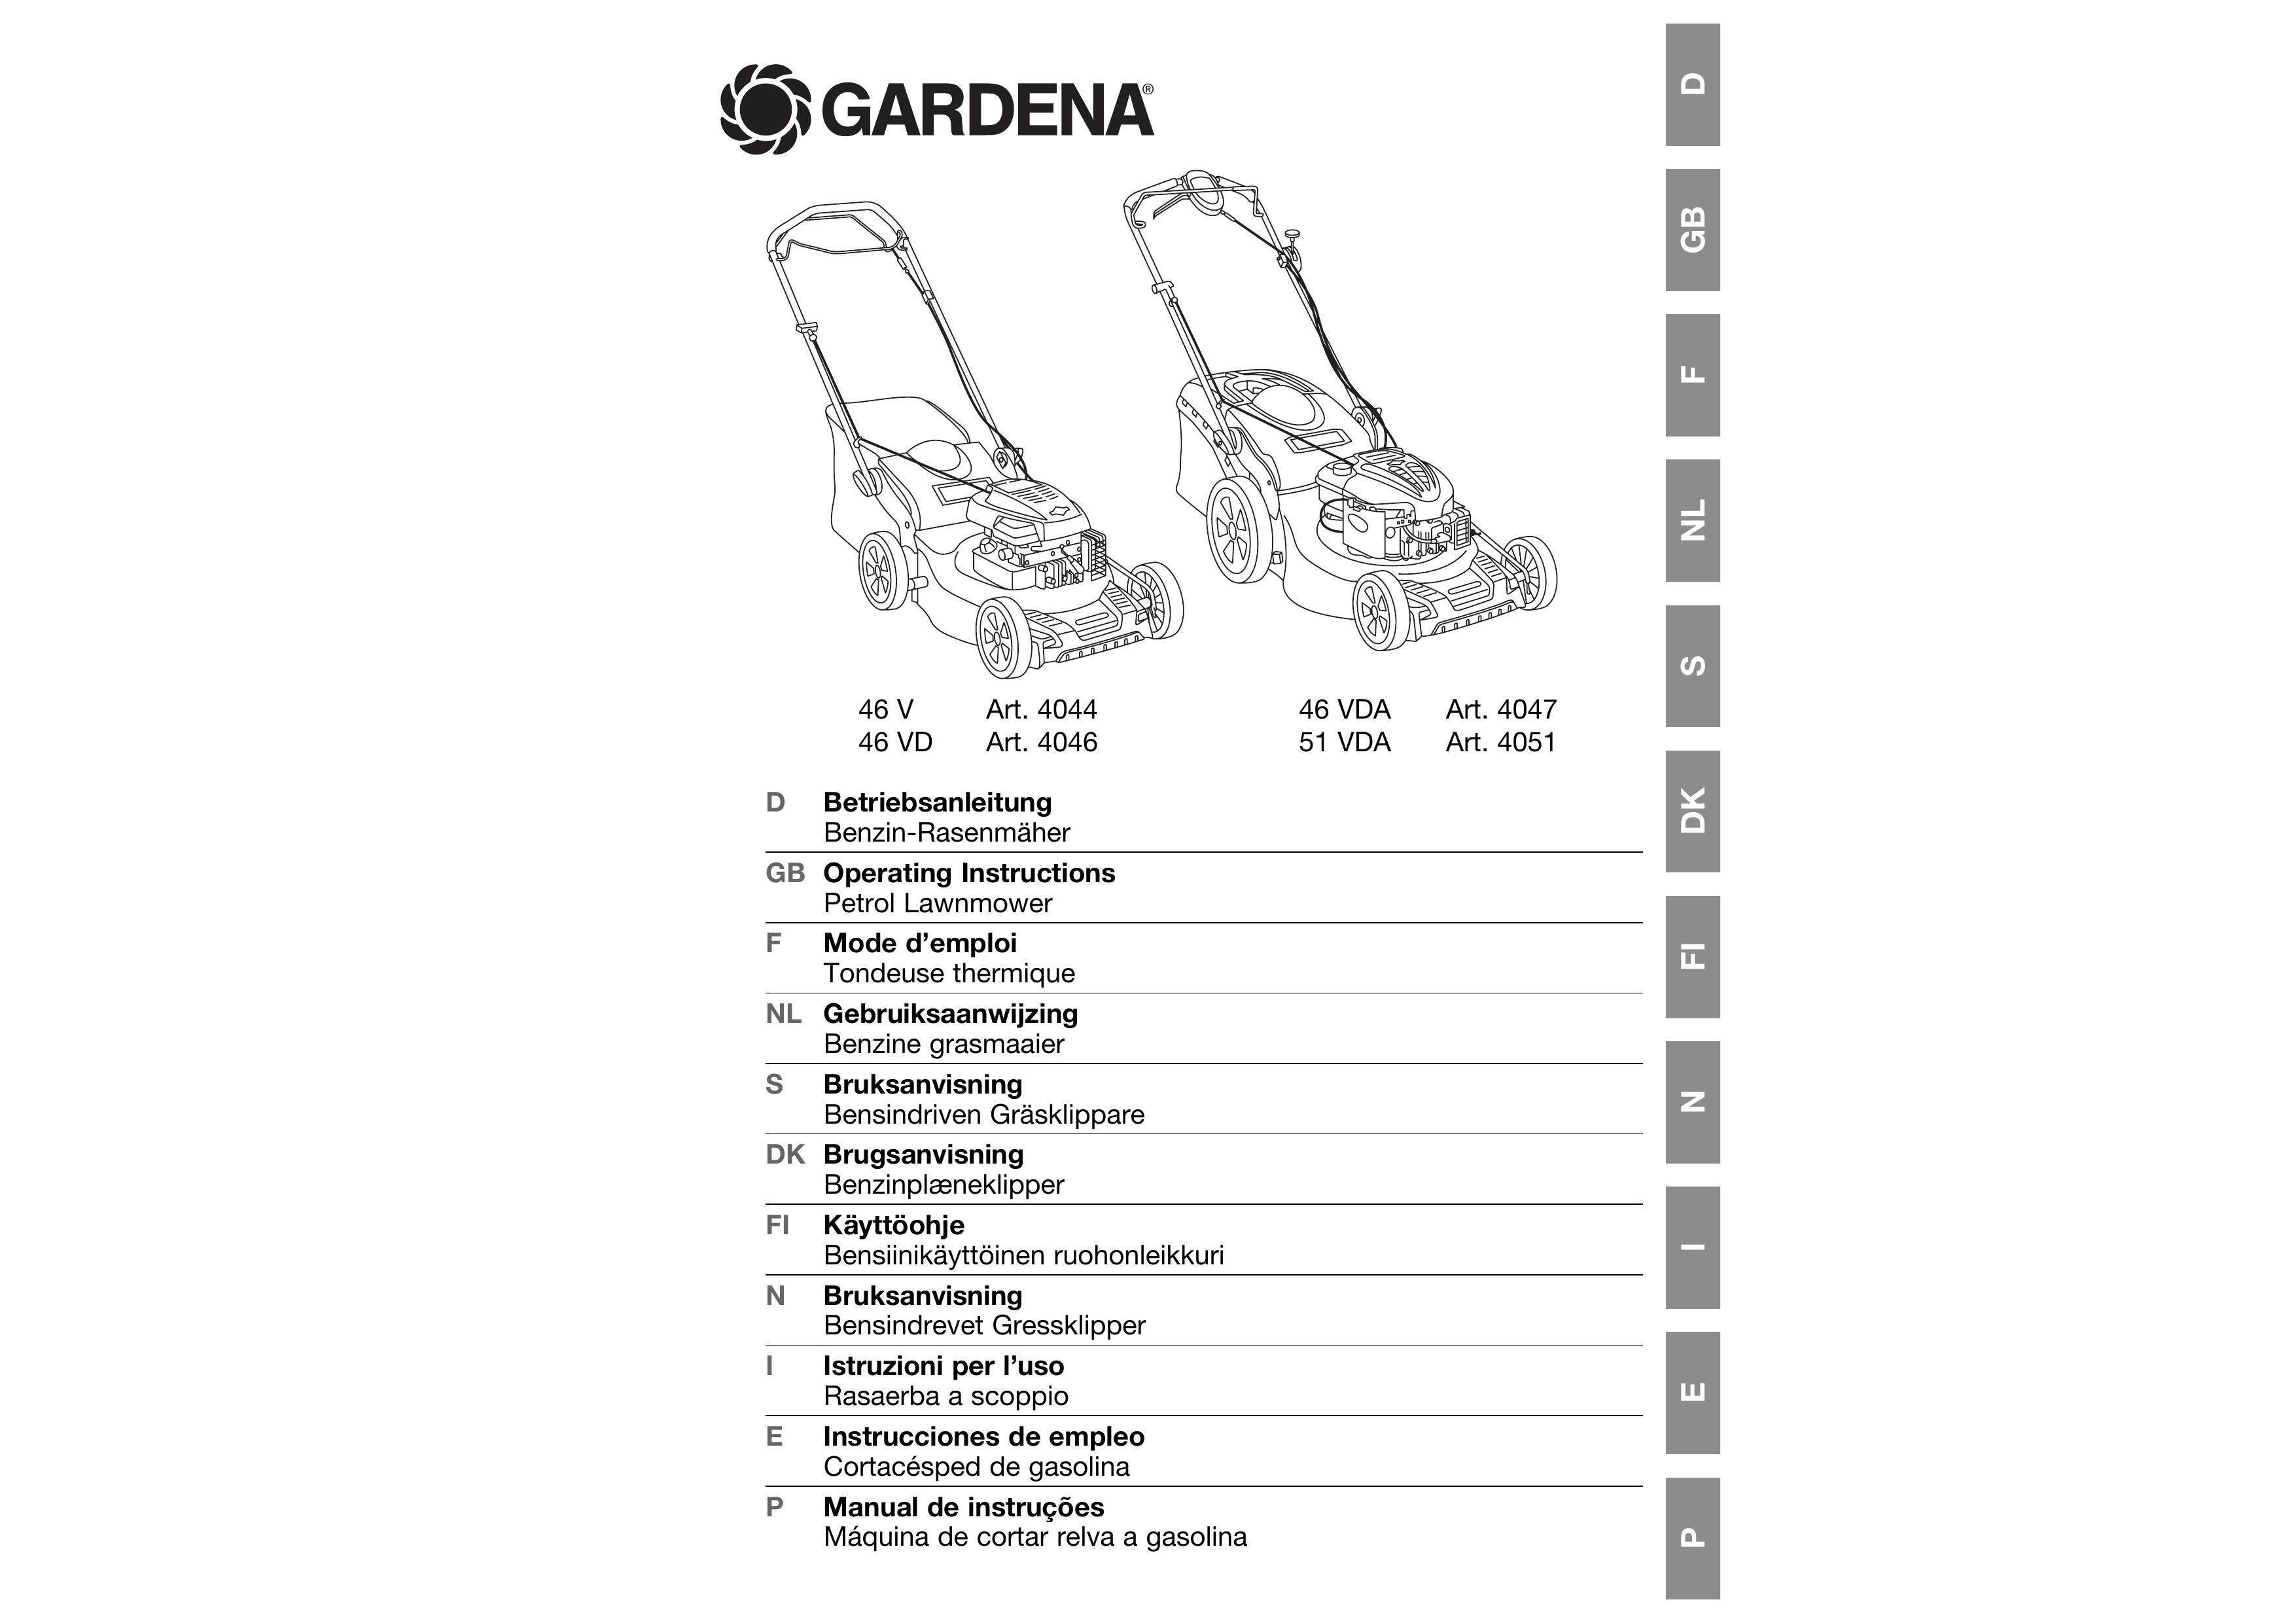 Gardena 4047 Lawn Mower User Manual